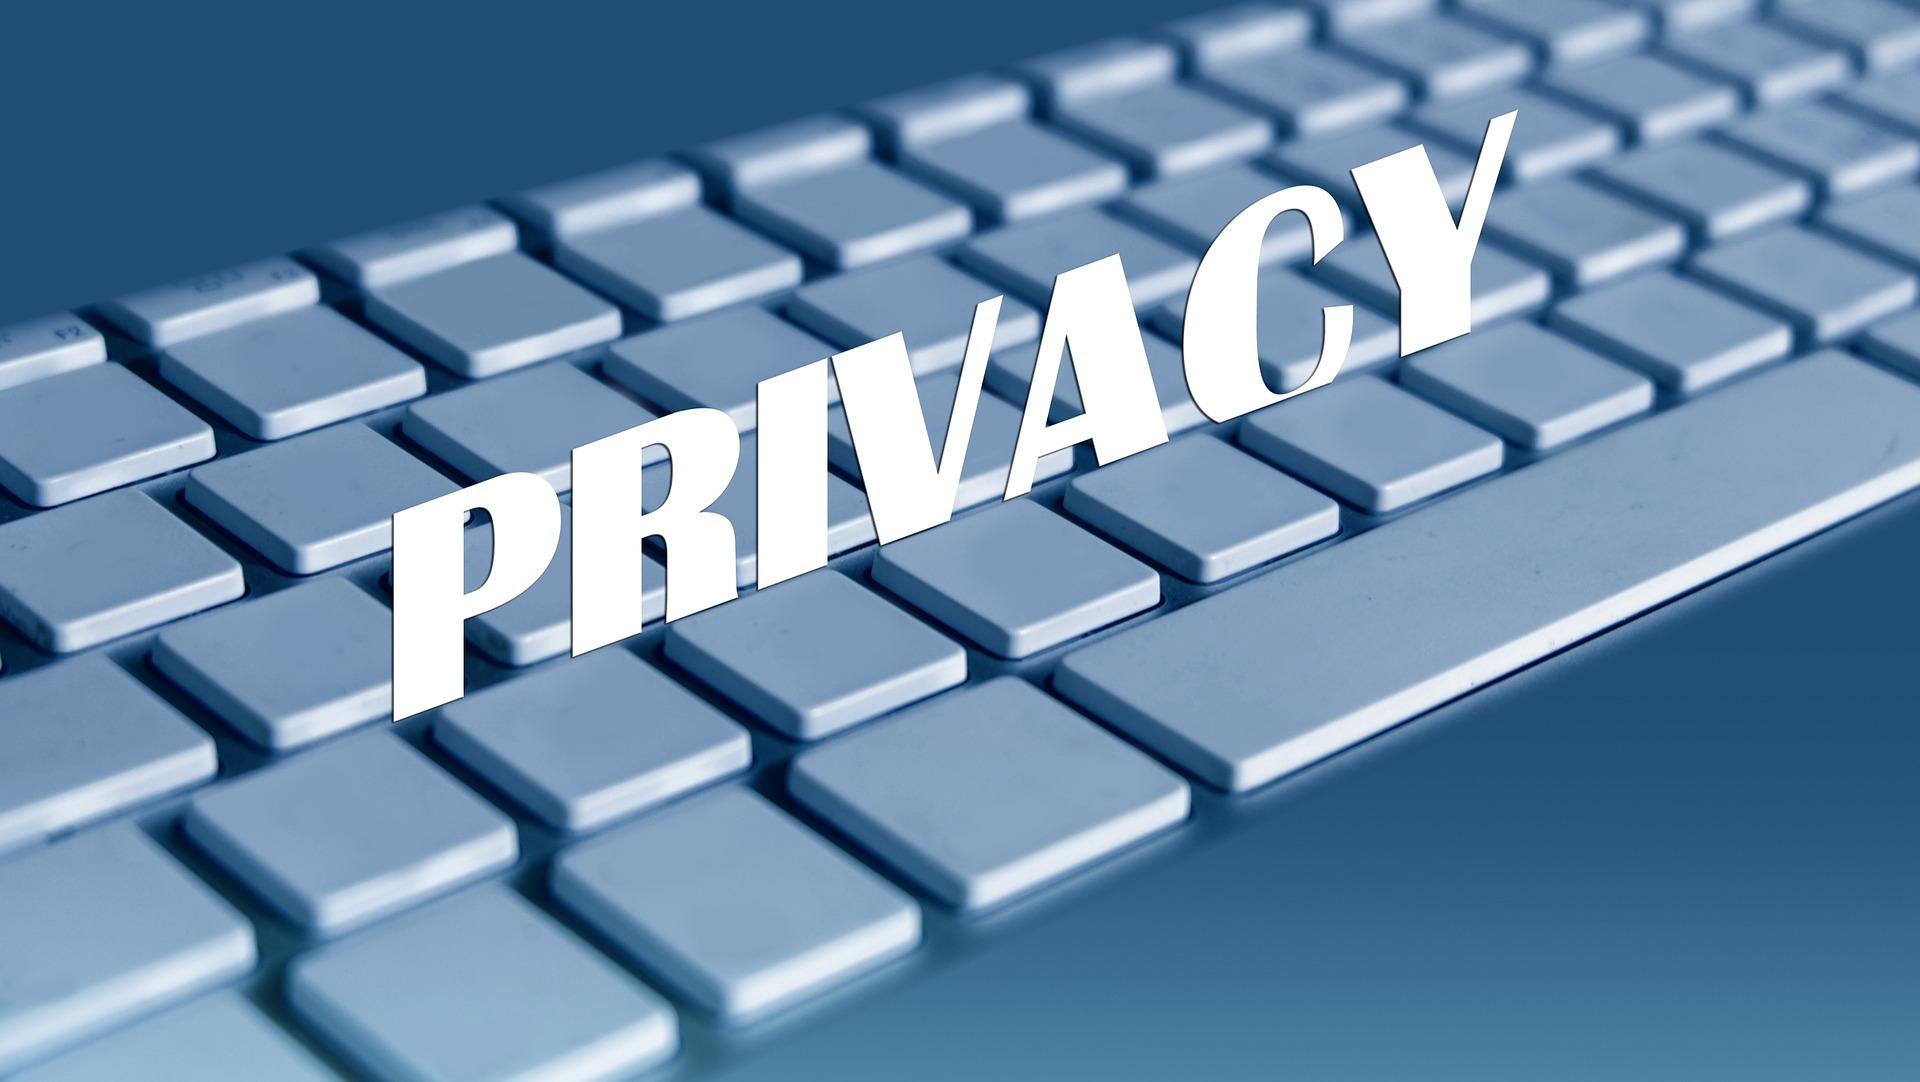 Privacy and keyboard illustration. Credit: Pixabay